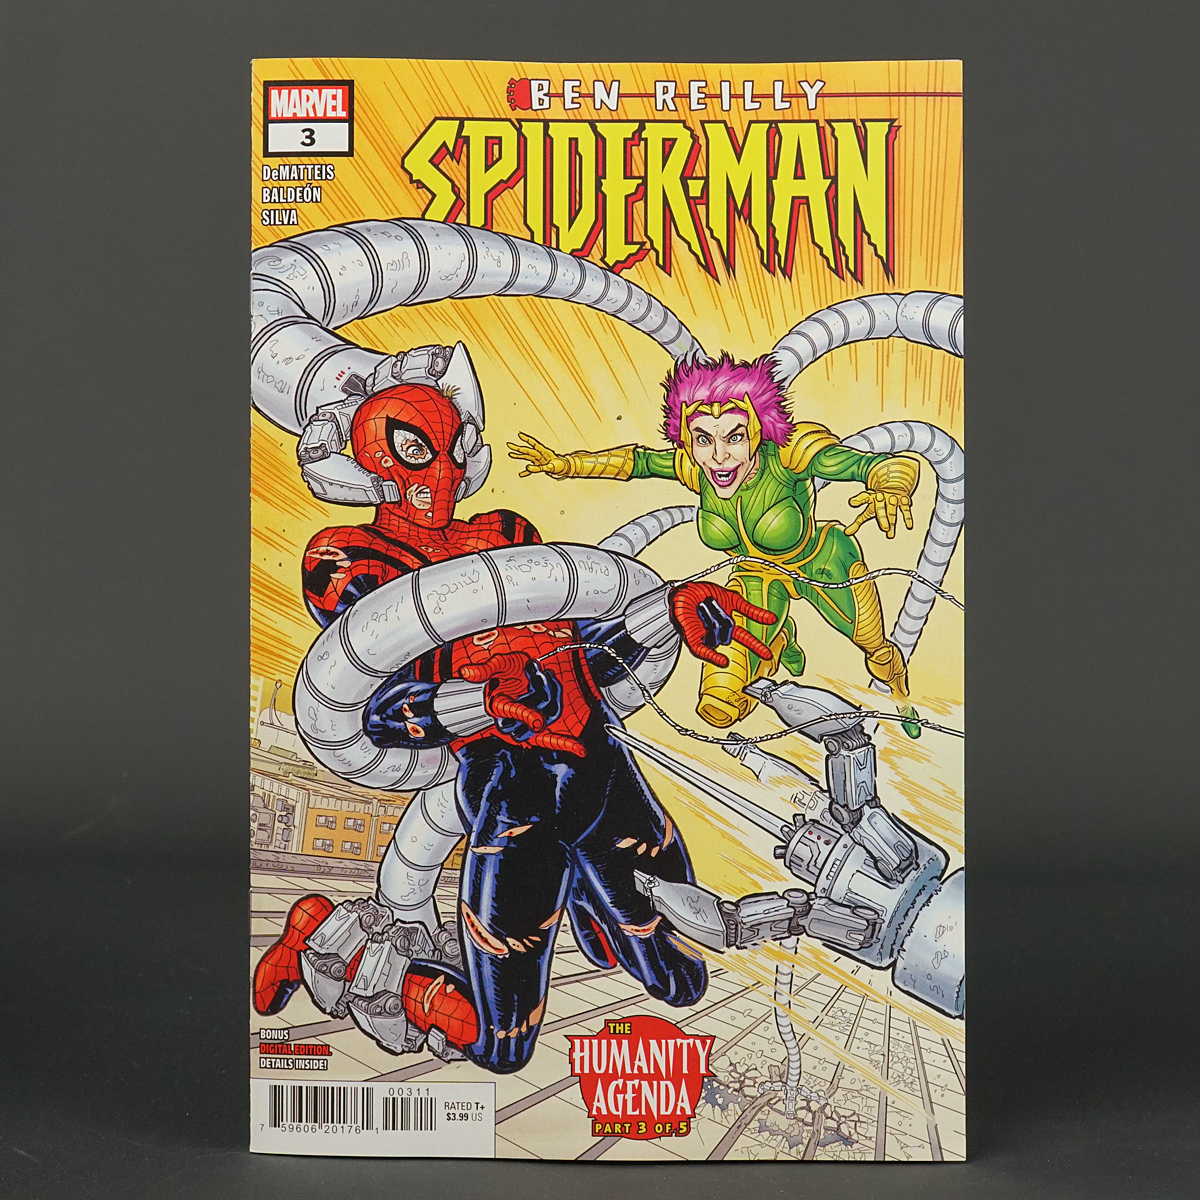 BEN REILLY SPIDER-MAN #3 Marvel Comics 2022 JAN220900 (CA) Skroce (W) Dematteis